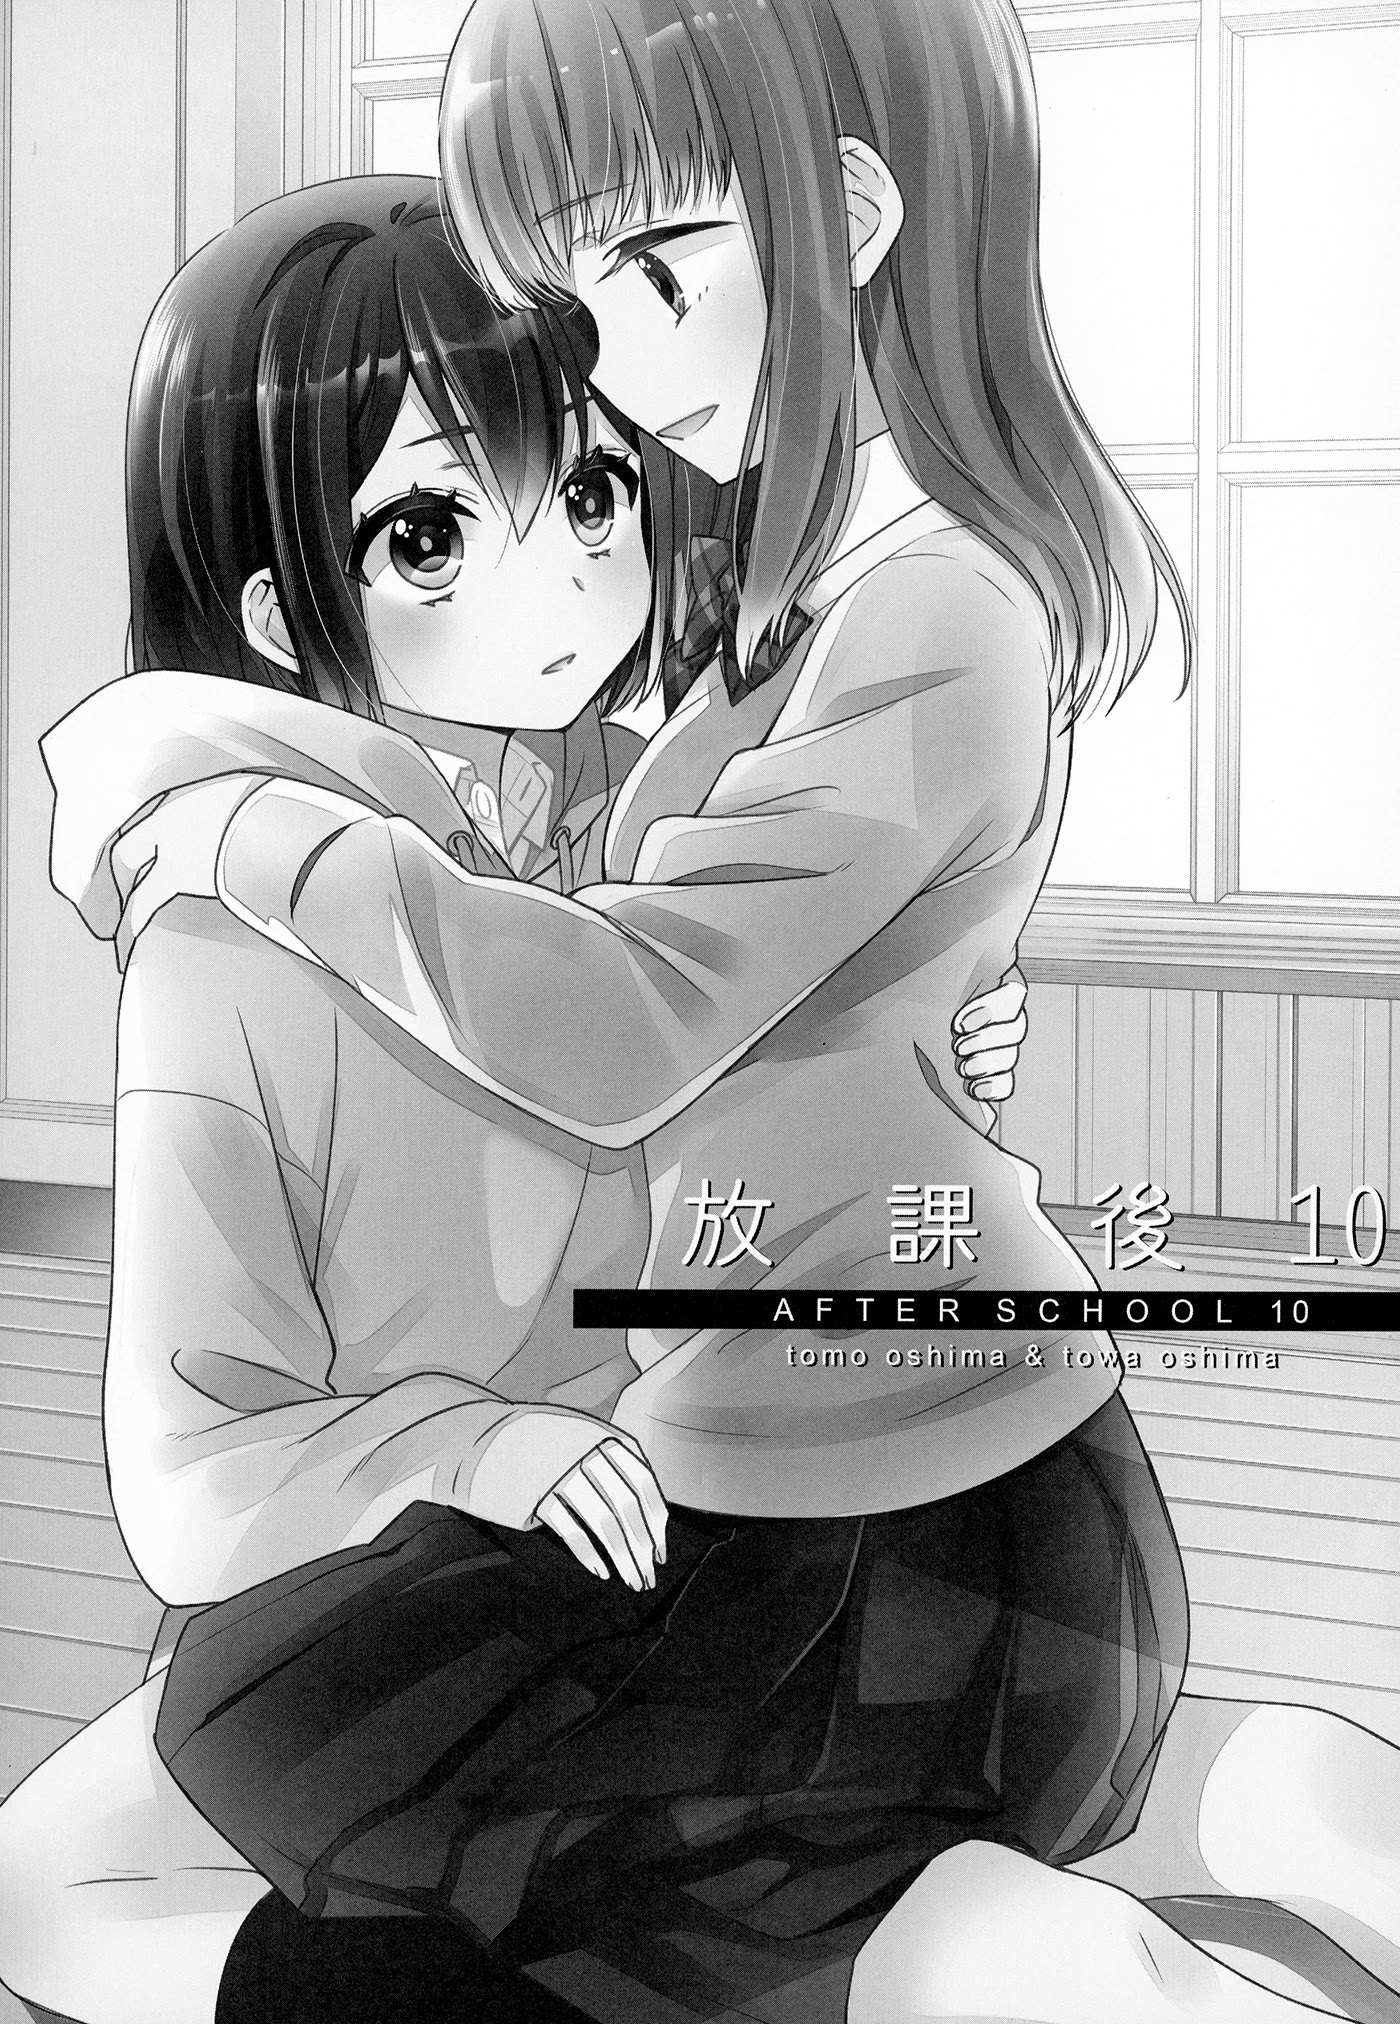 After School (Ooshima Tomo & Ooshima Towa) Chapter 10 - Picture 2